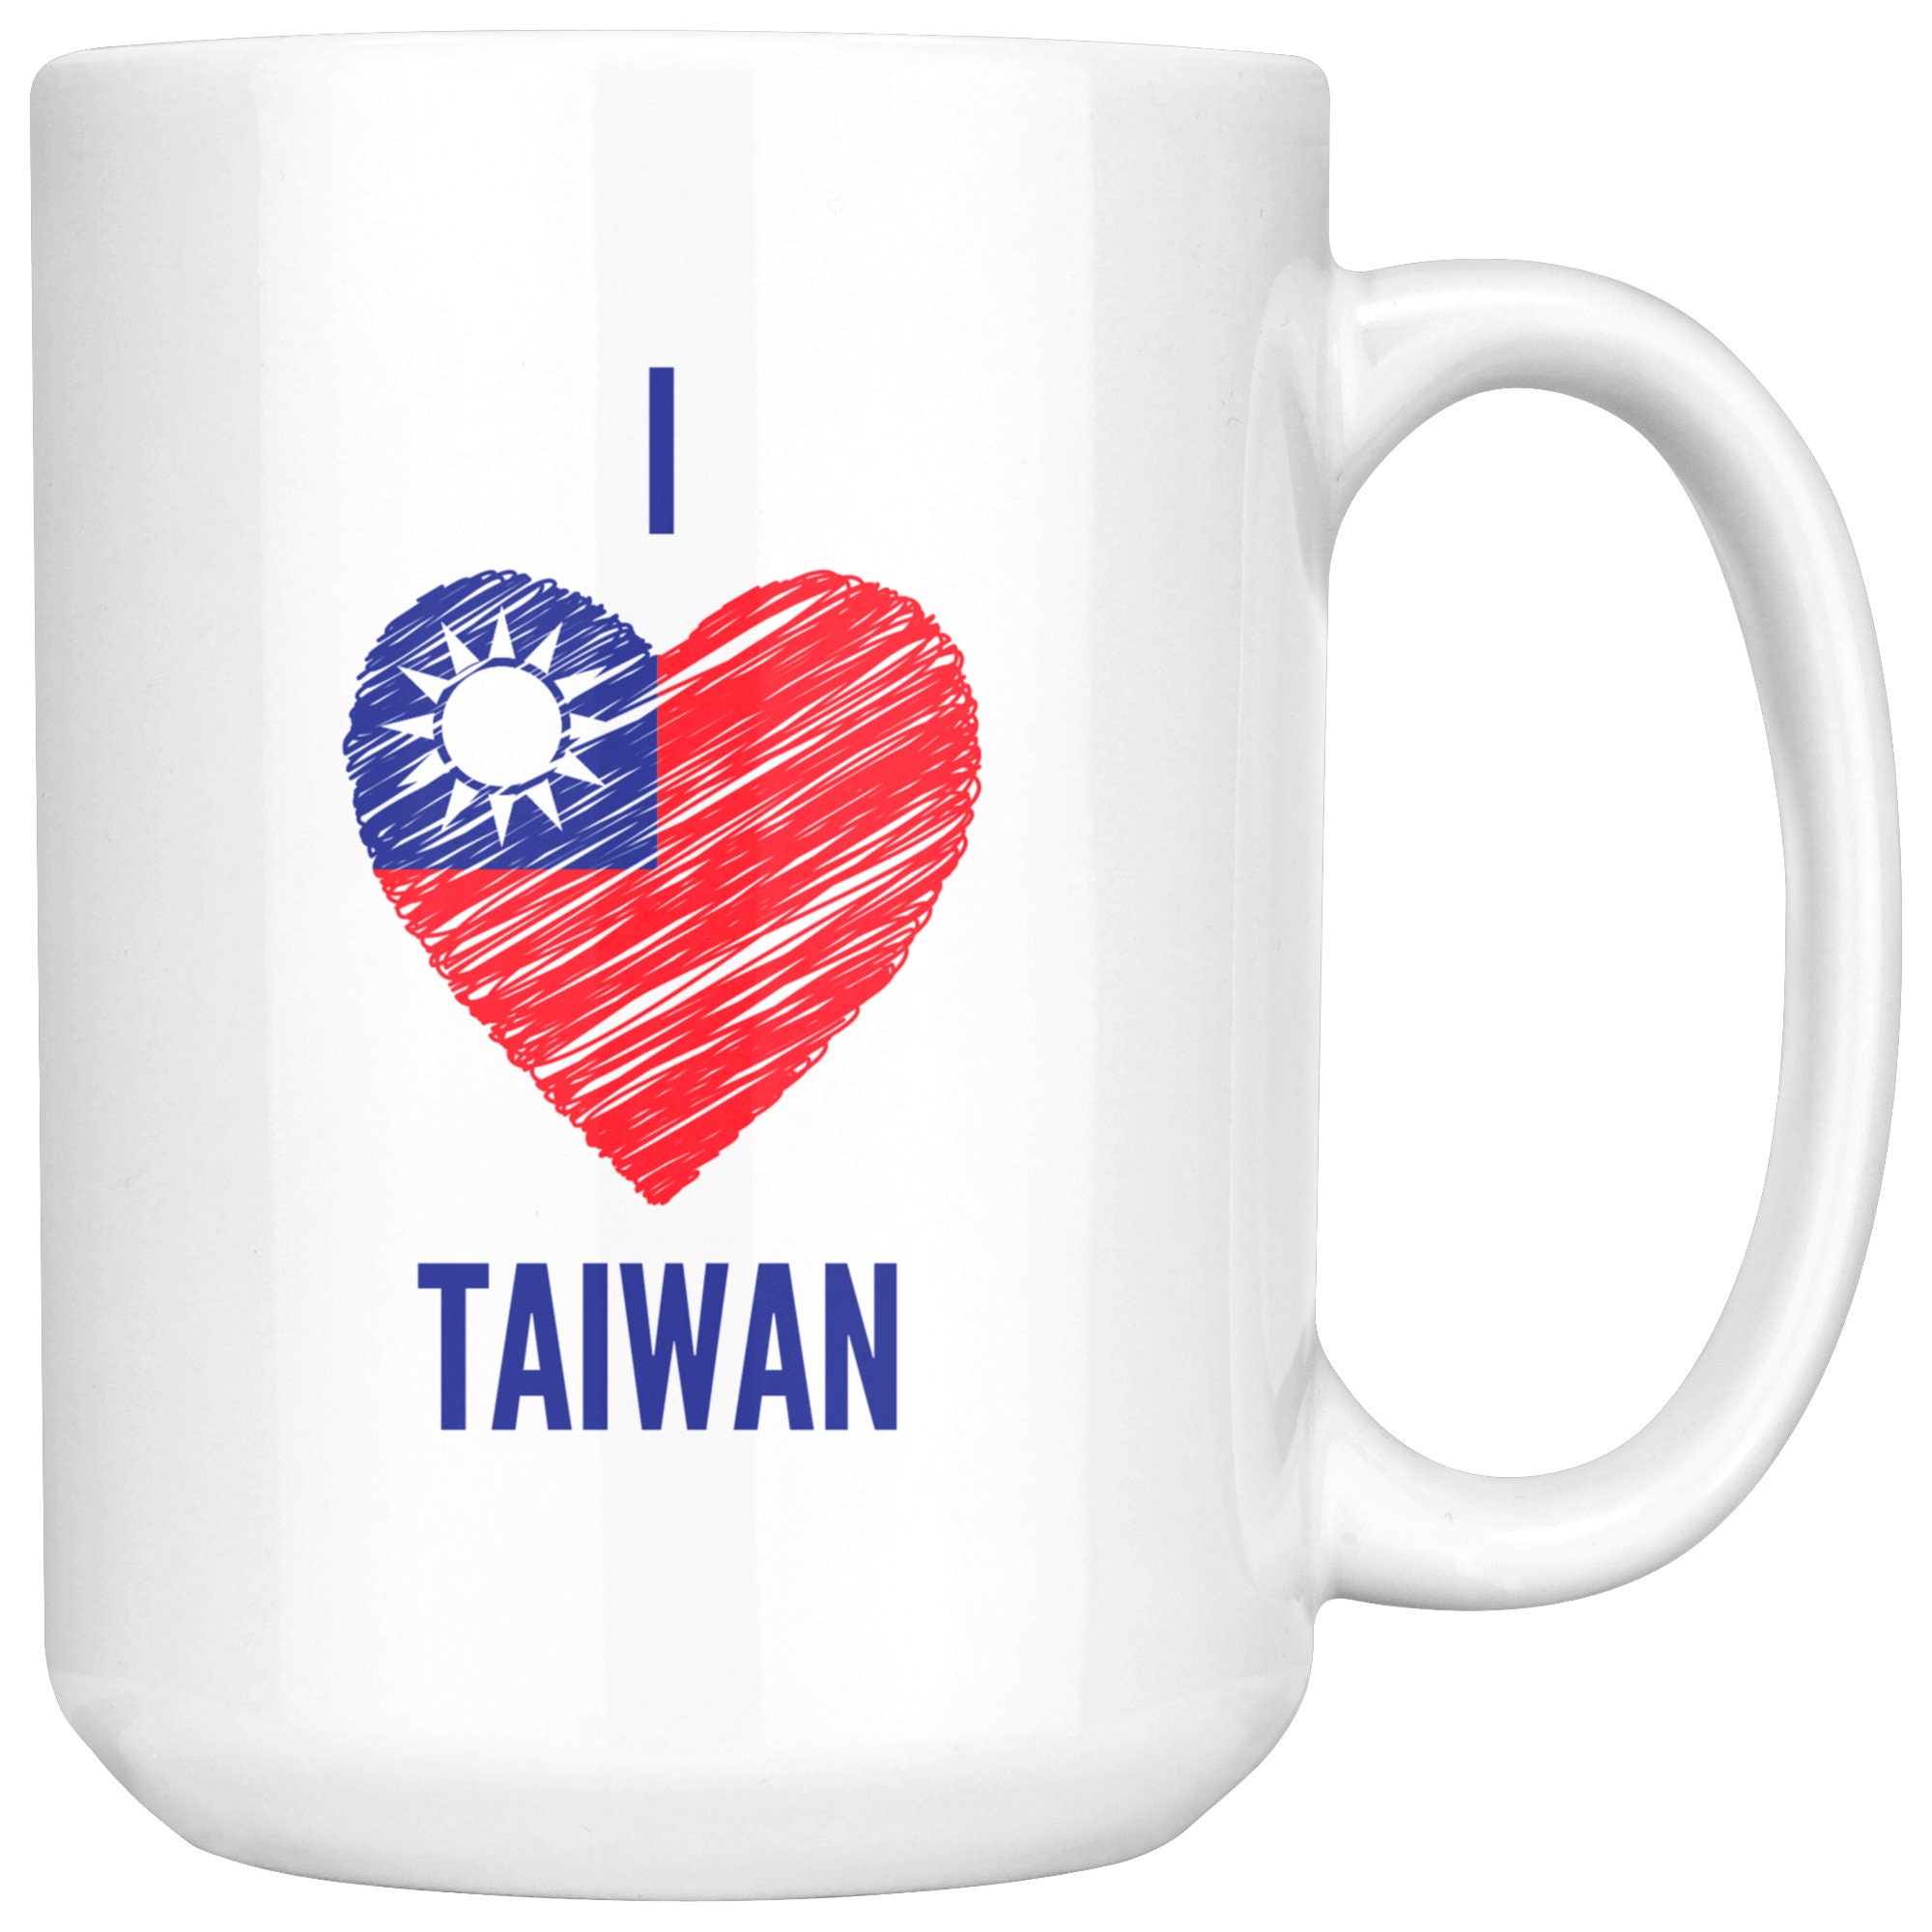 taiwan tourism gift